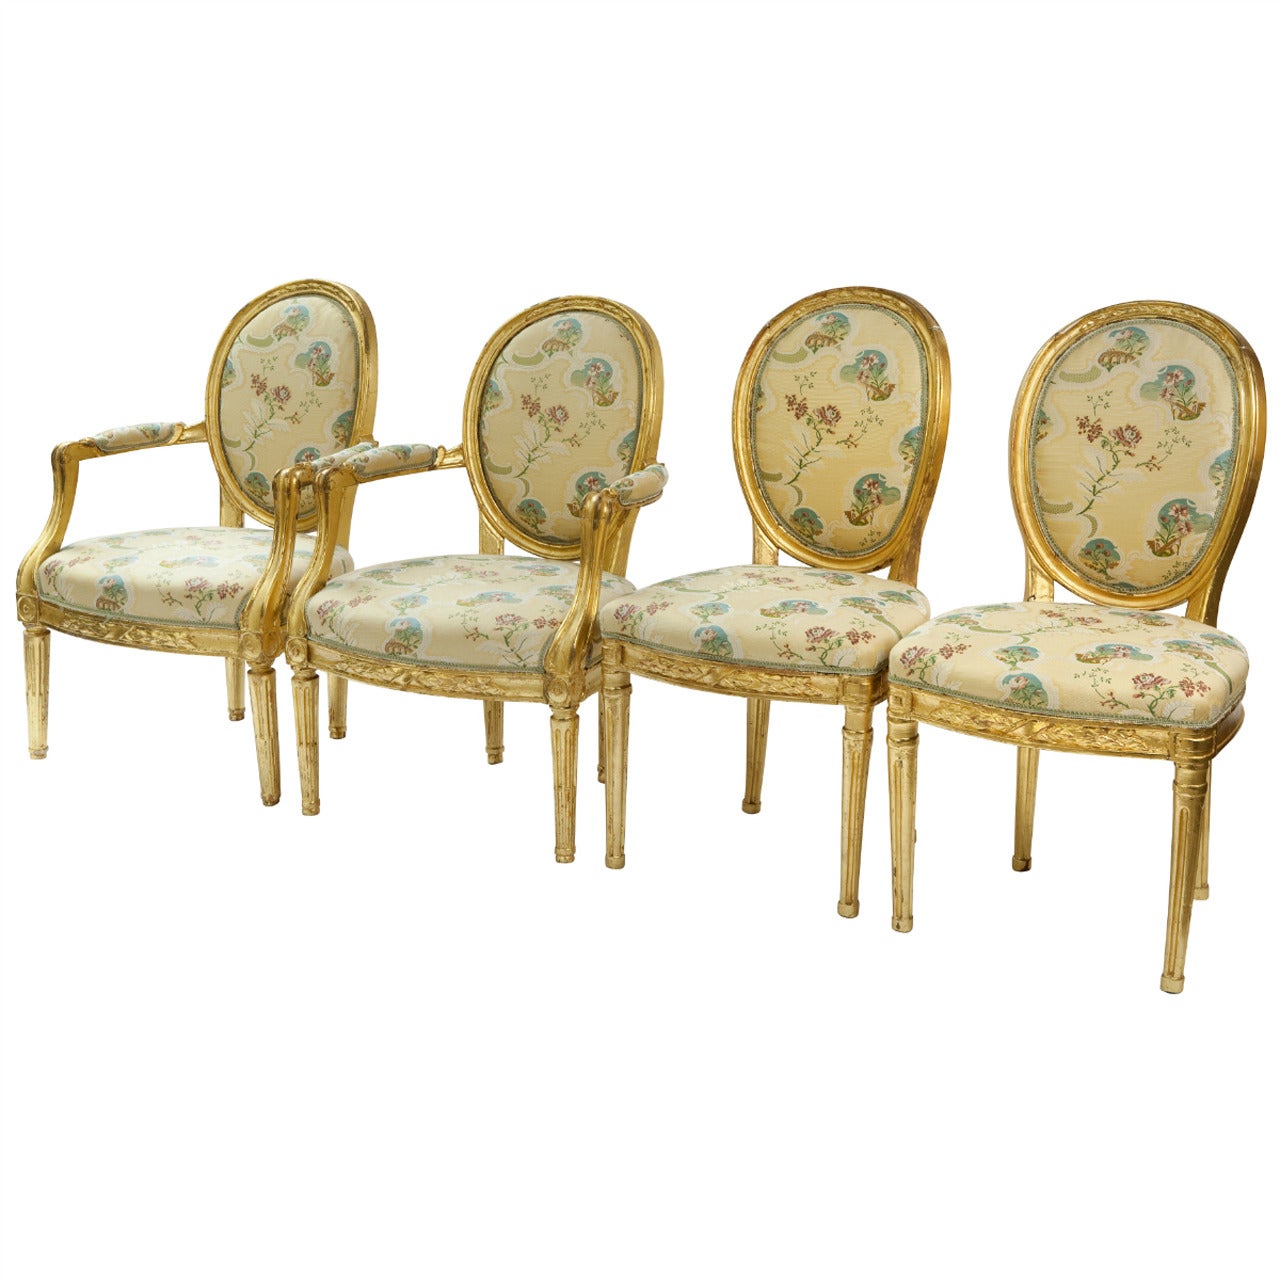 18th Century Danish Giltwood Chairs Attributed to Caspar Frederik Harsdorff For Sale